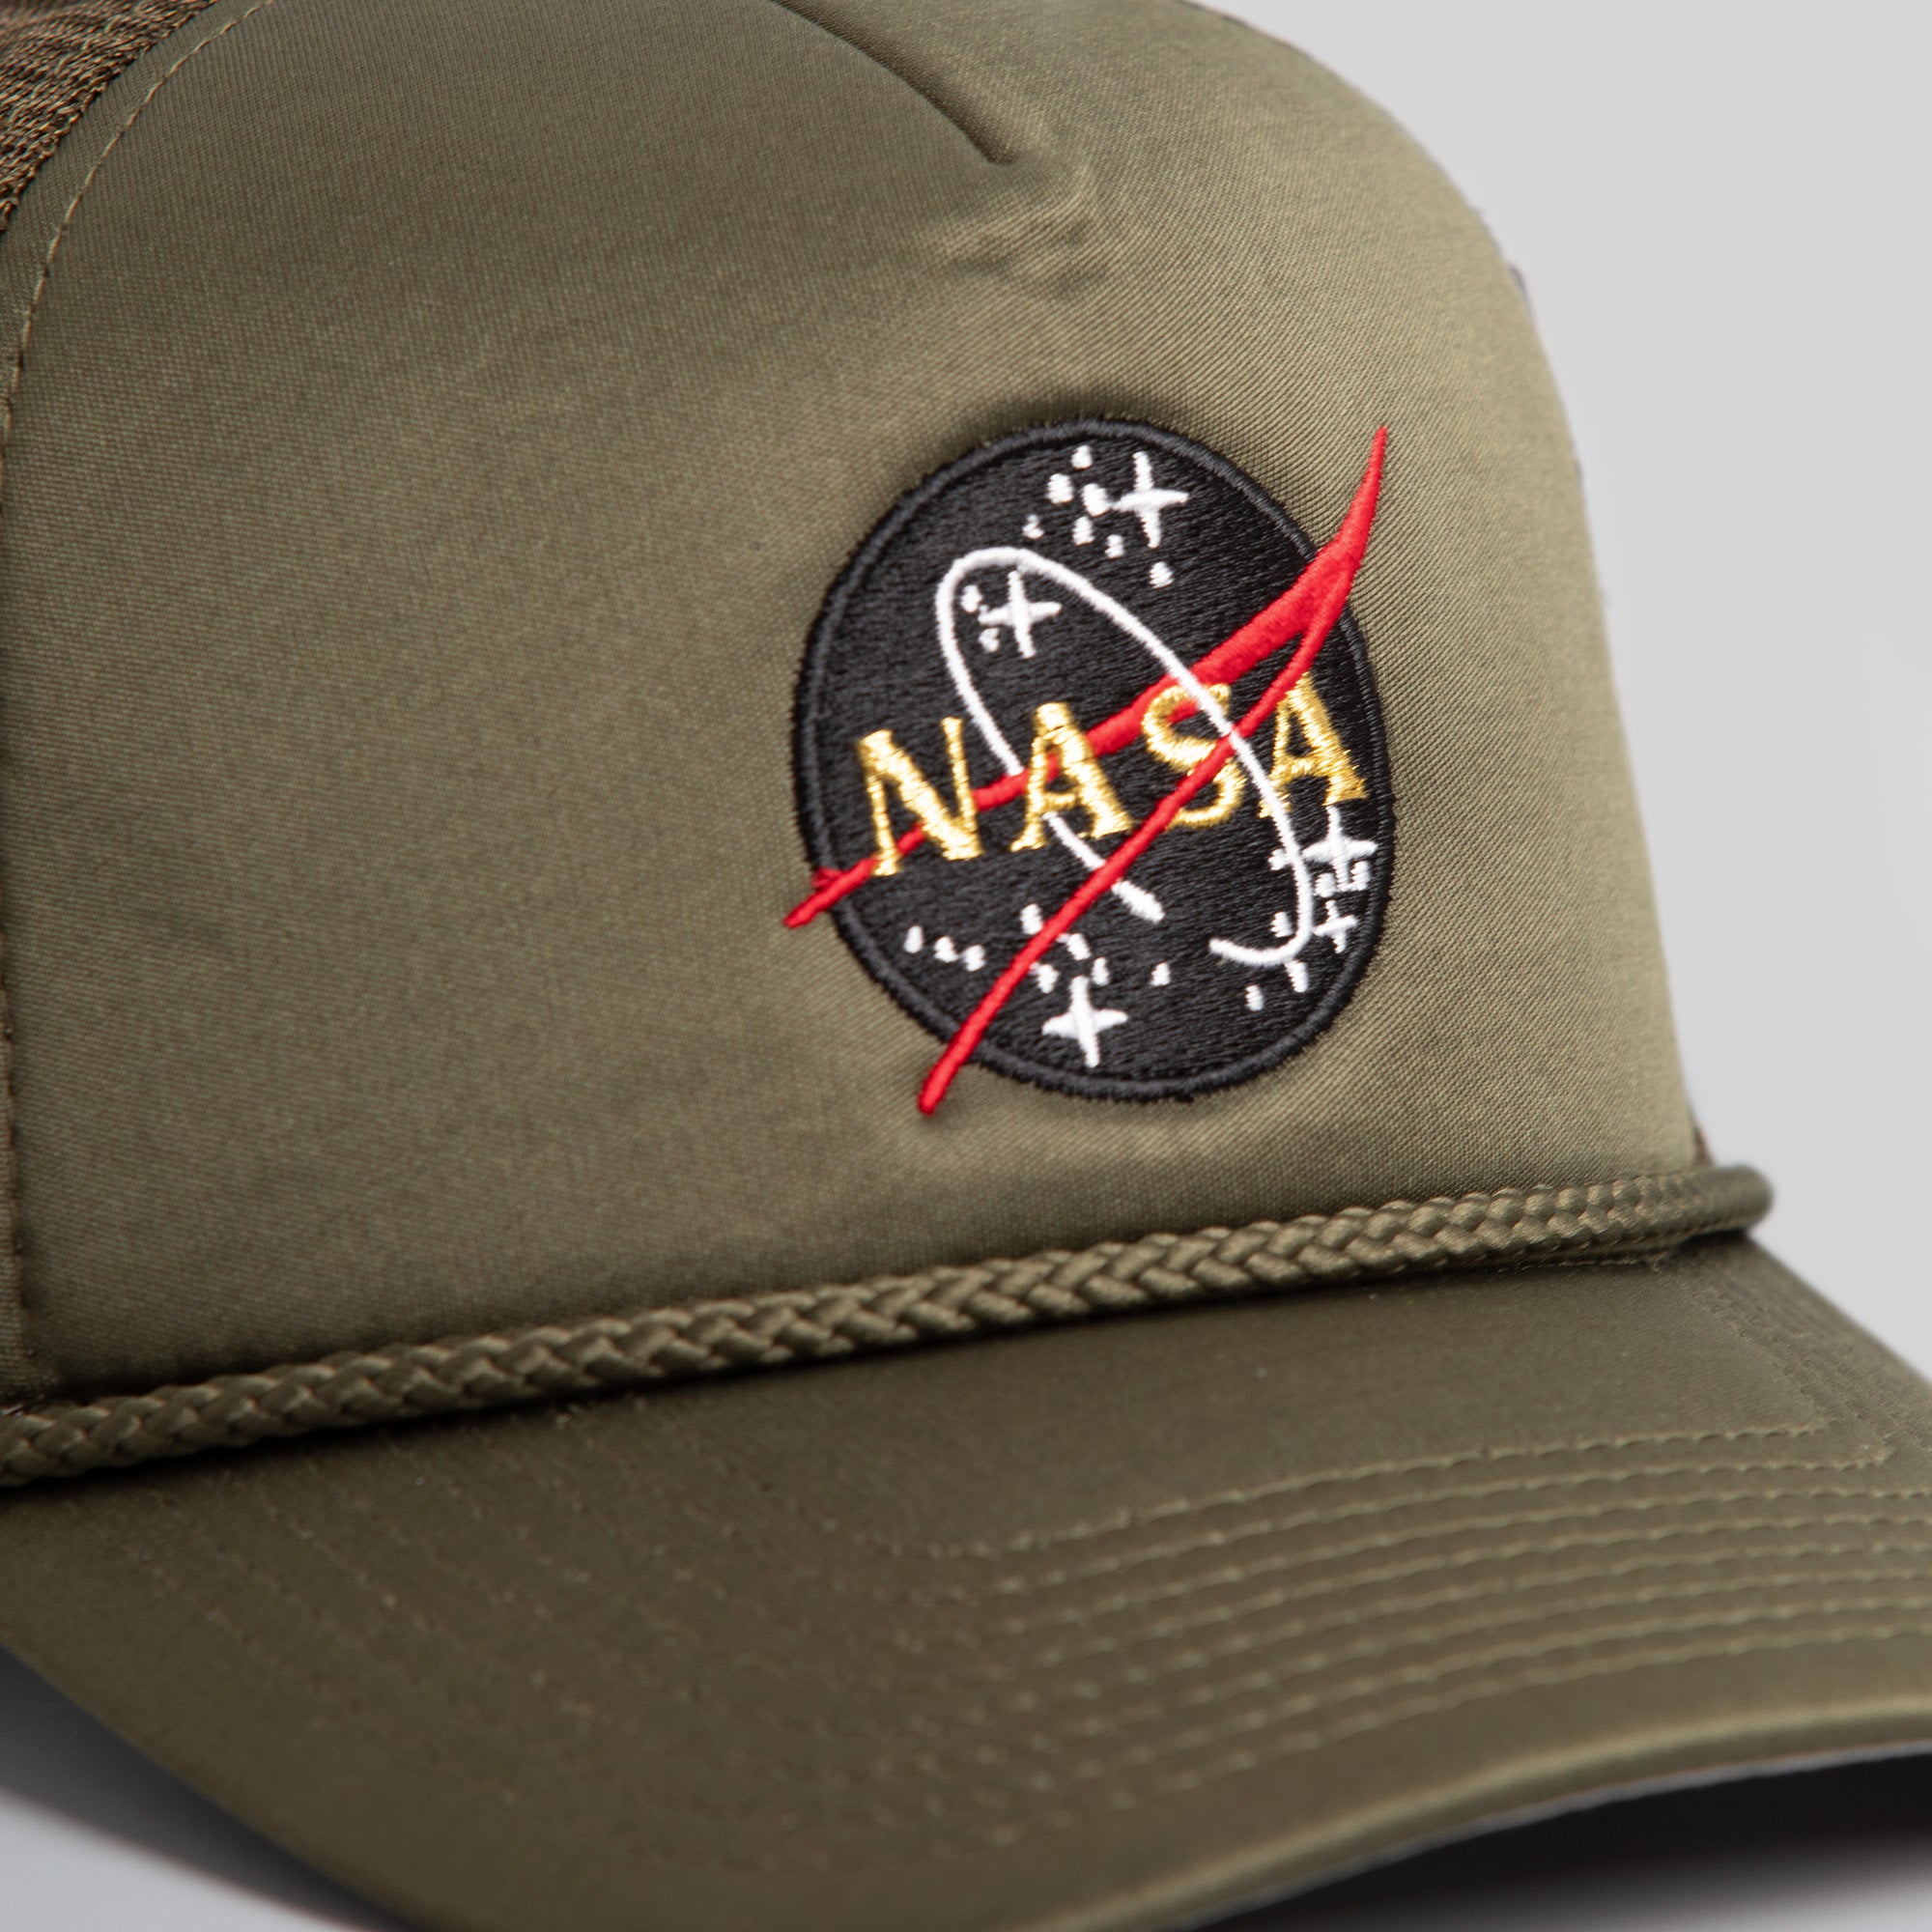 SKYLAB NASA 50TH ANNIVERSARY OLIVE TRUCKER HAT